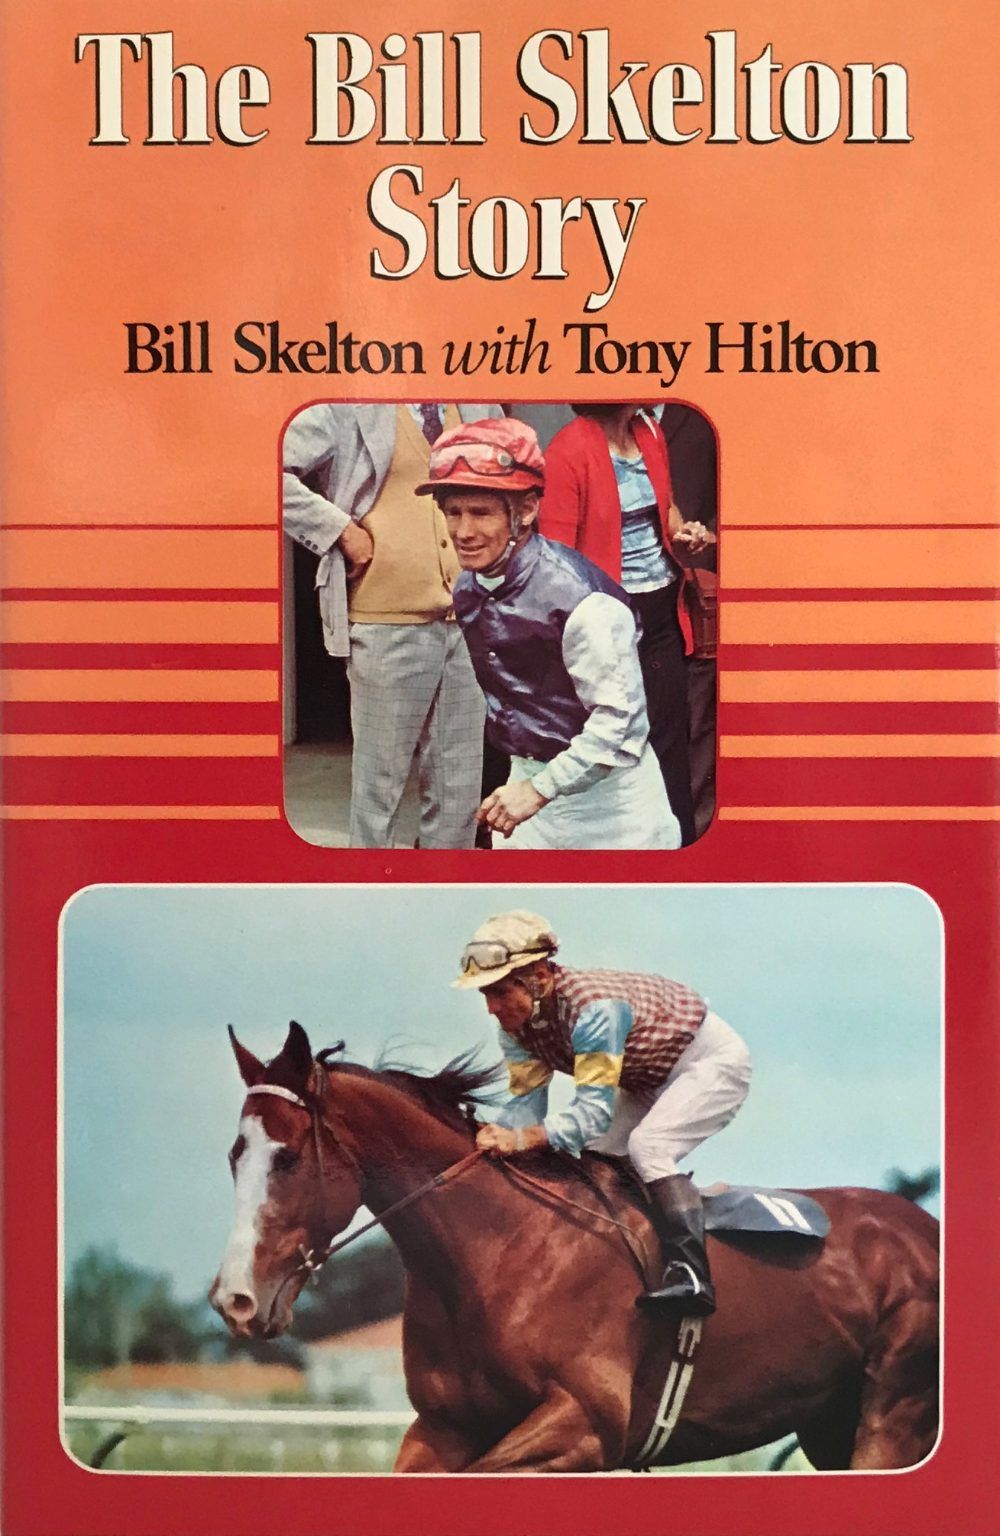 THE BILL SKELTON STORY